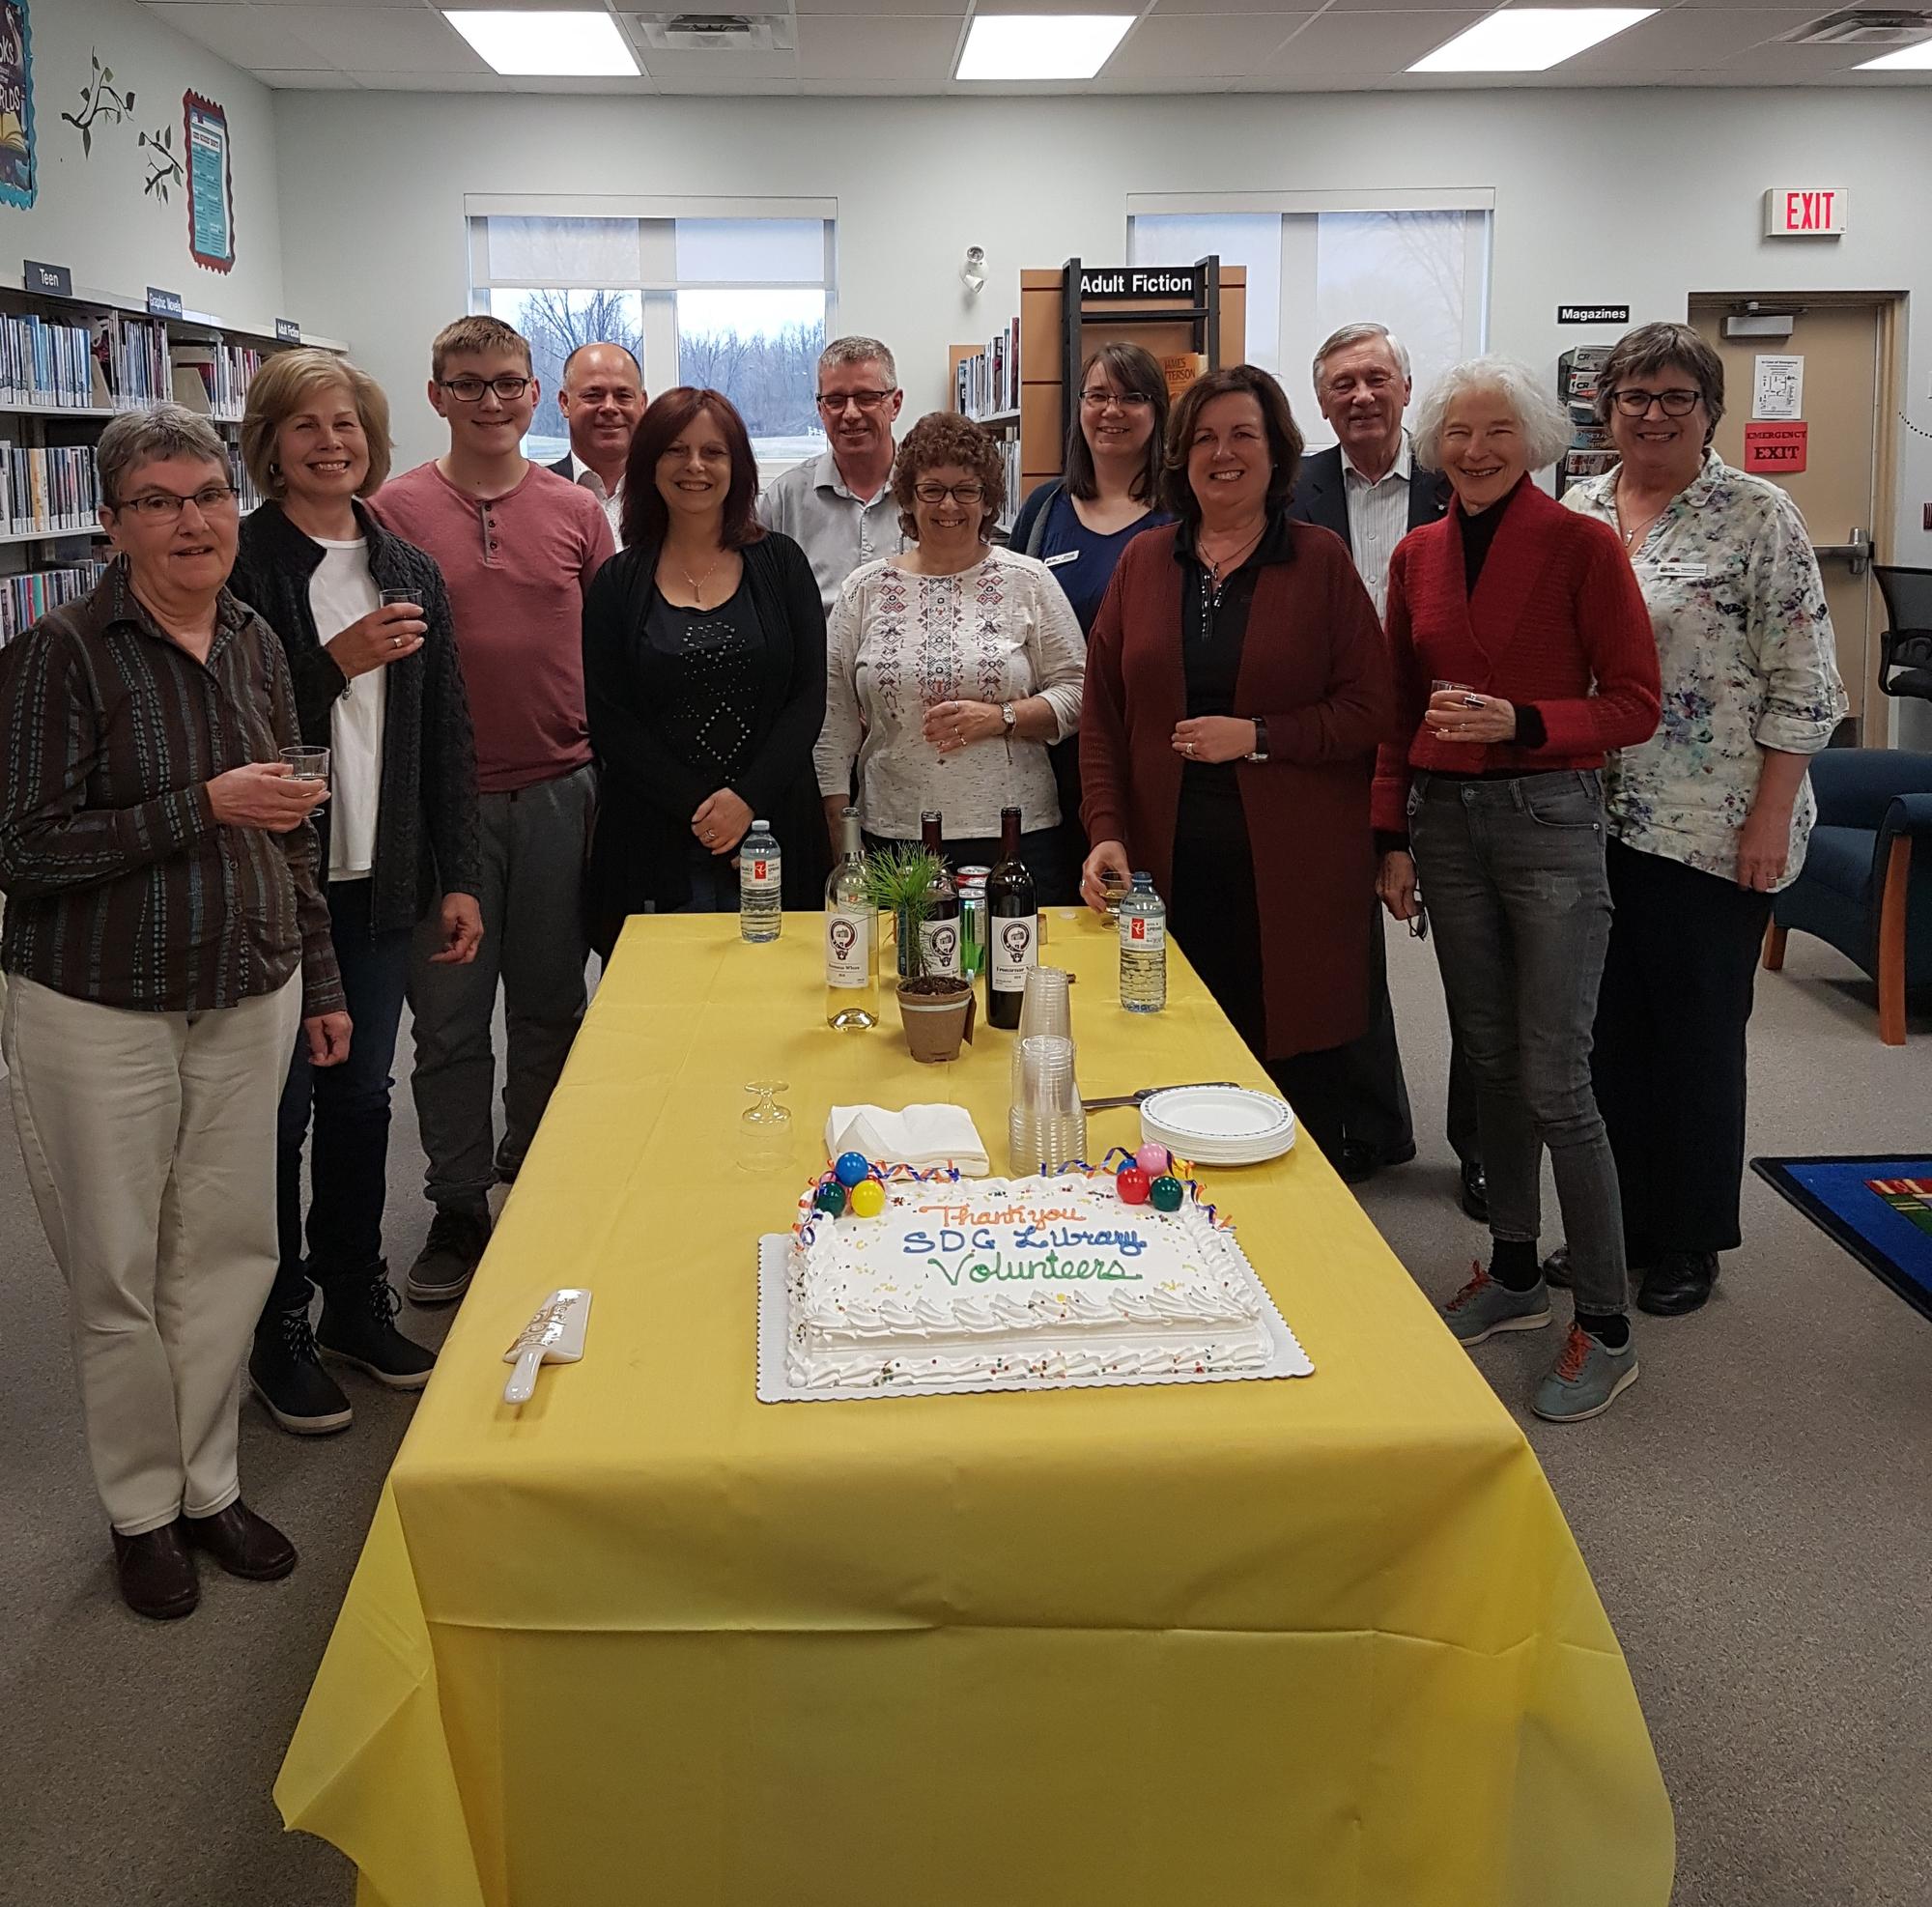 SDG Library celebrates its volunteers